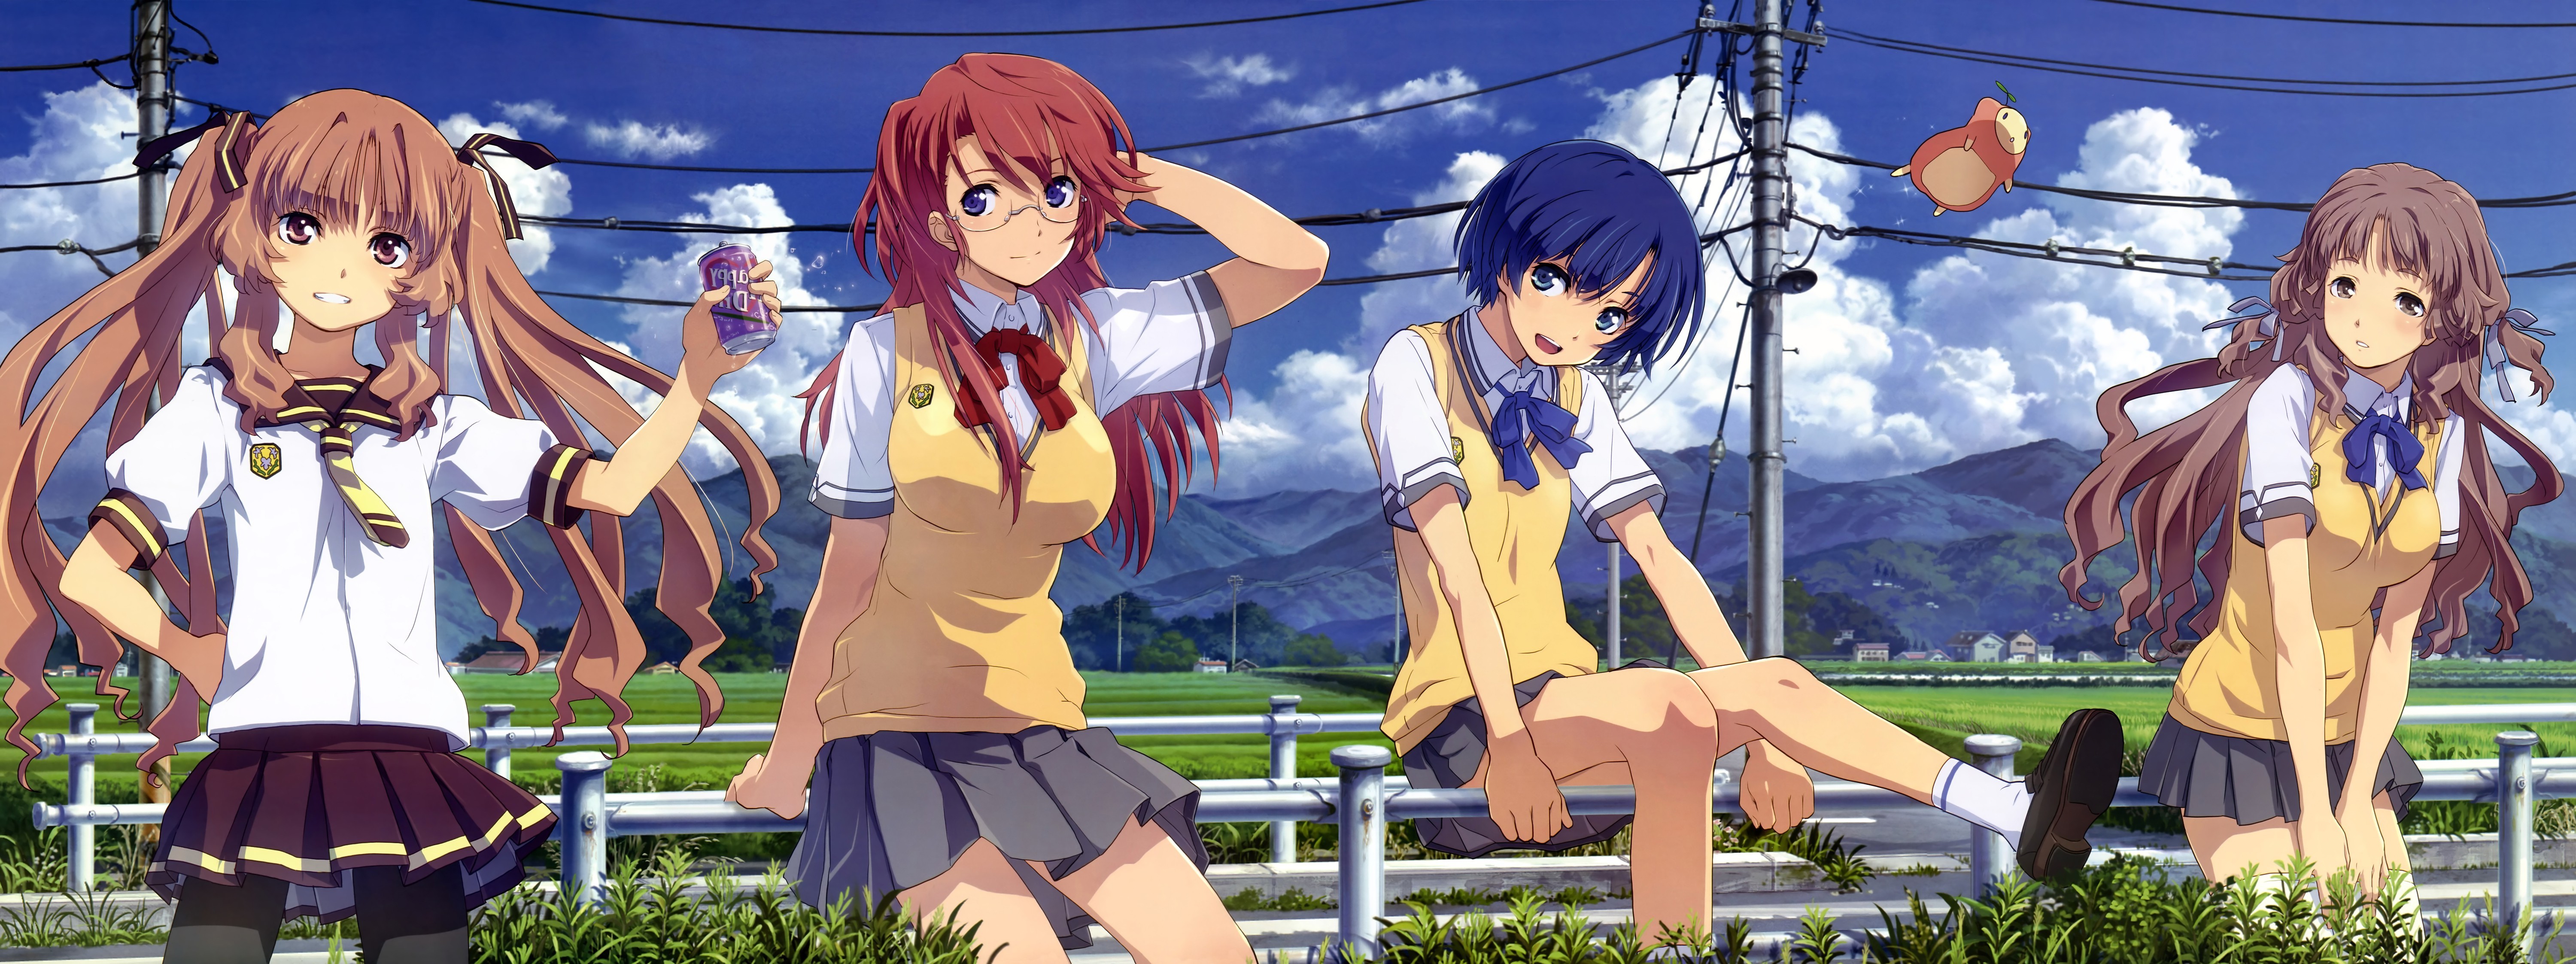 anime Girls, School Uniform, Schoolgirls, Group Of Women, Field Wallpaper